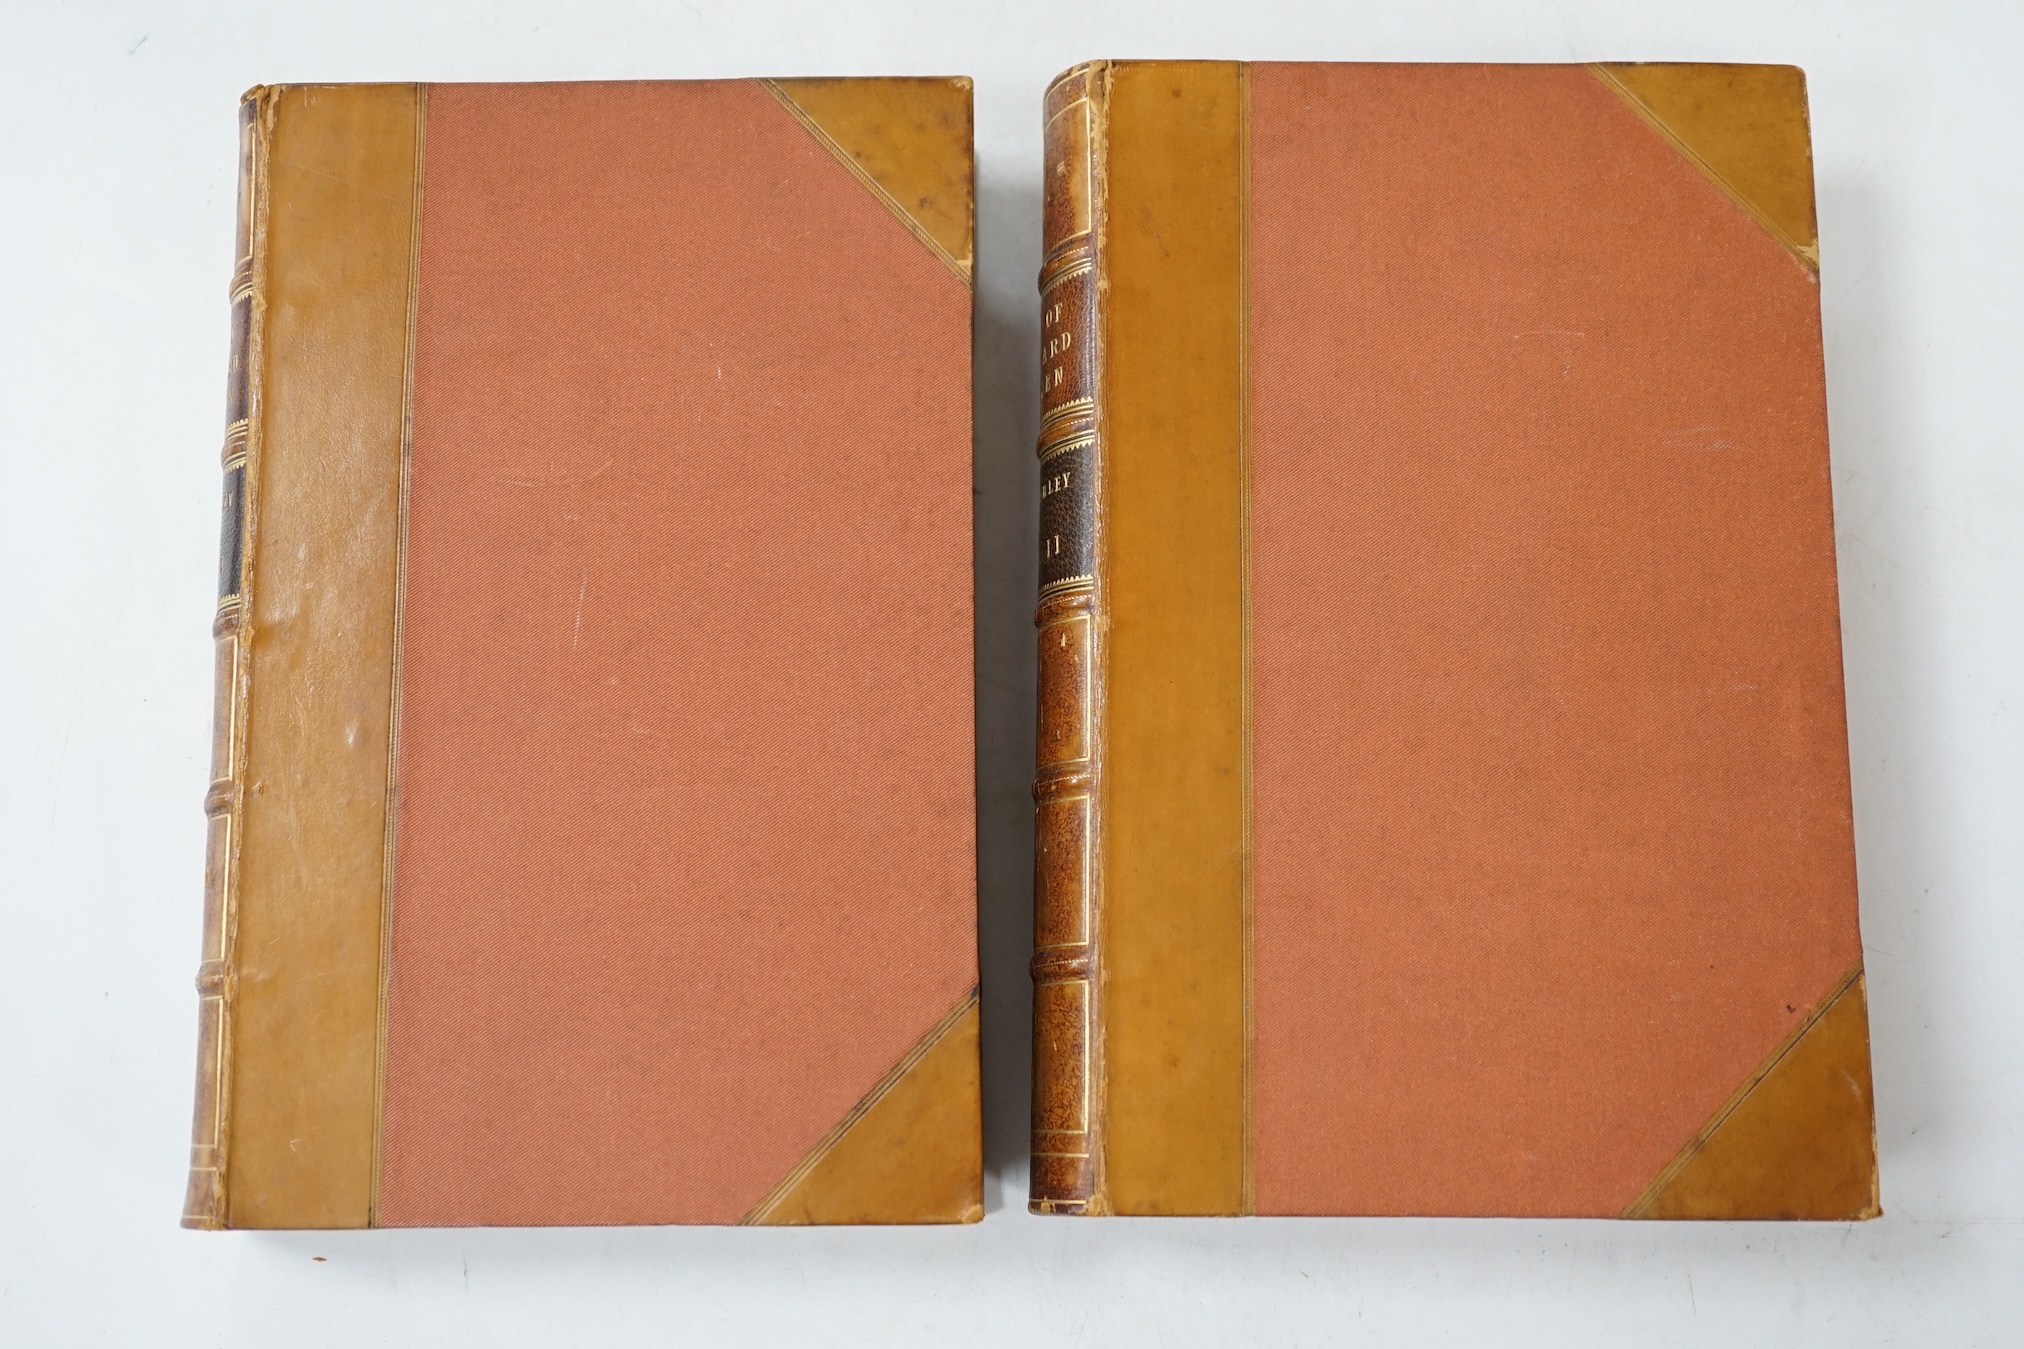 Morley, John - The Life of Richard Cobden, 2 vols, half calf, Chapman and Hall, London, 1881